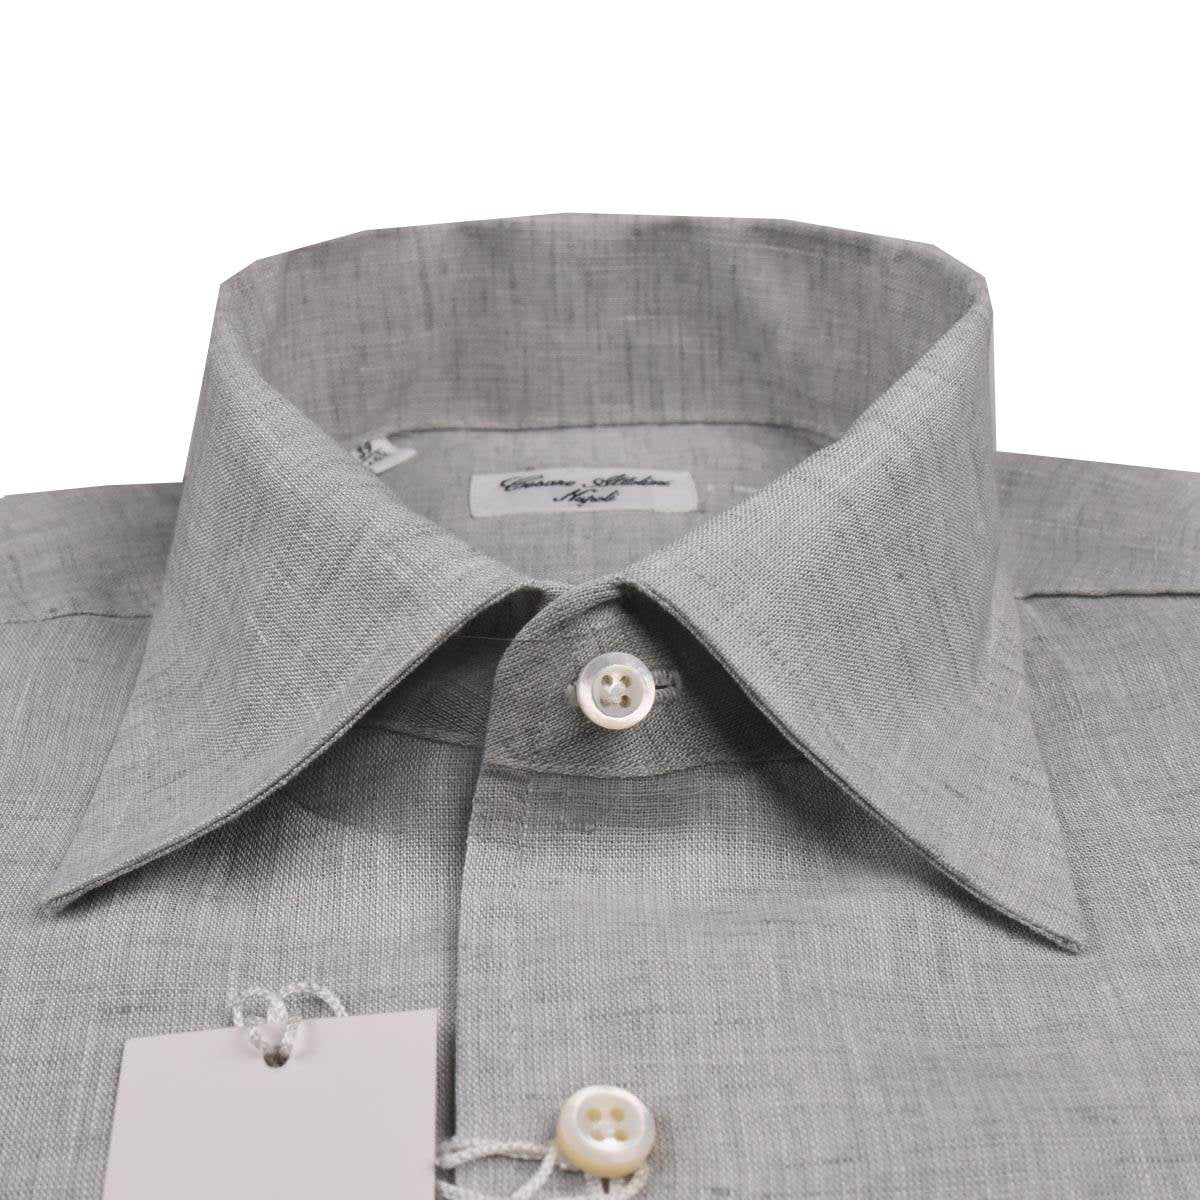 Cesare attolini gray linen shirt